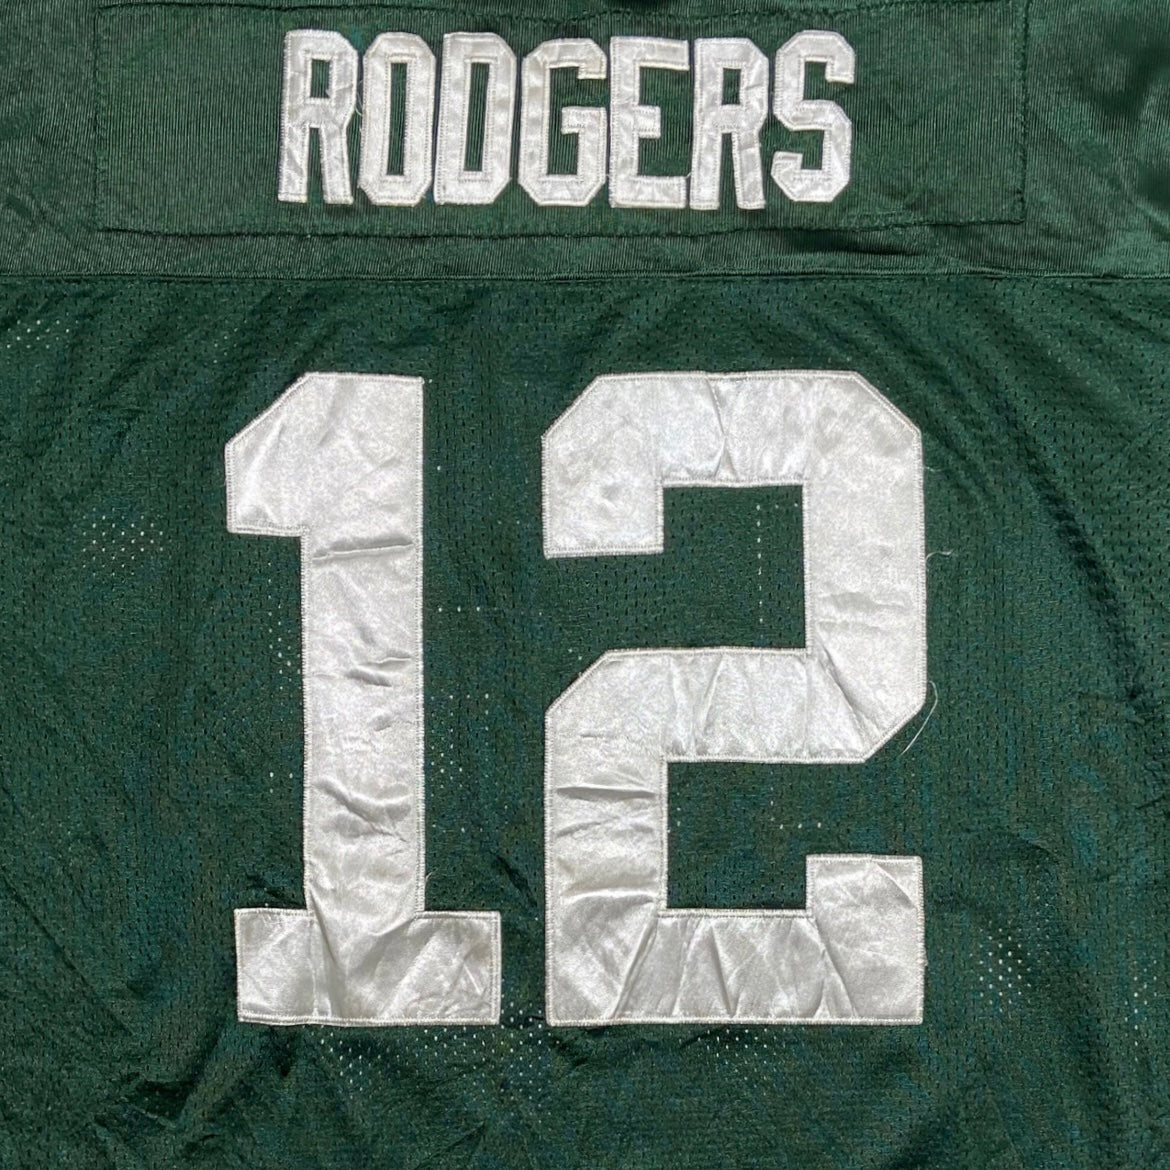 Vintage Reebok Packers Rodgers jersey - XXL